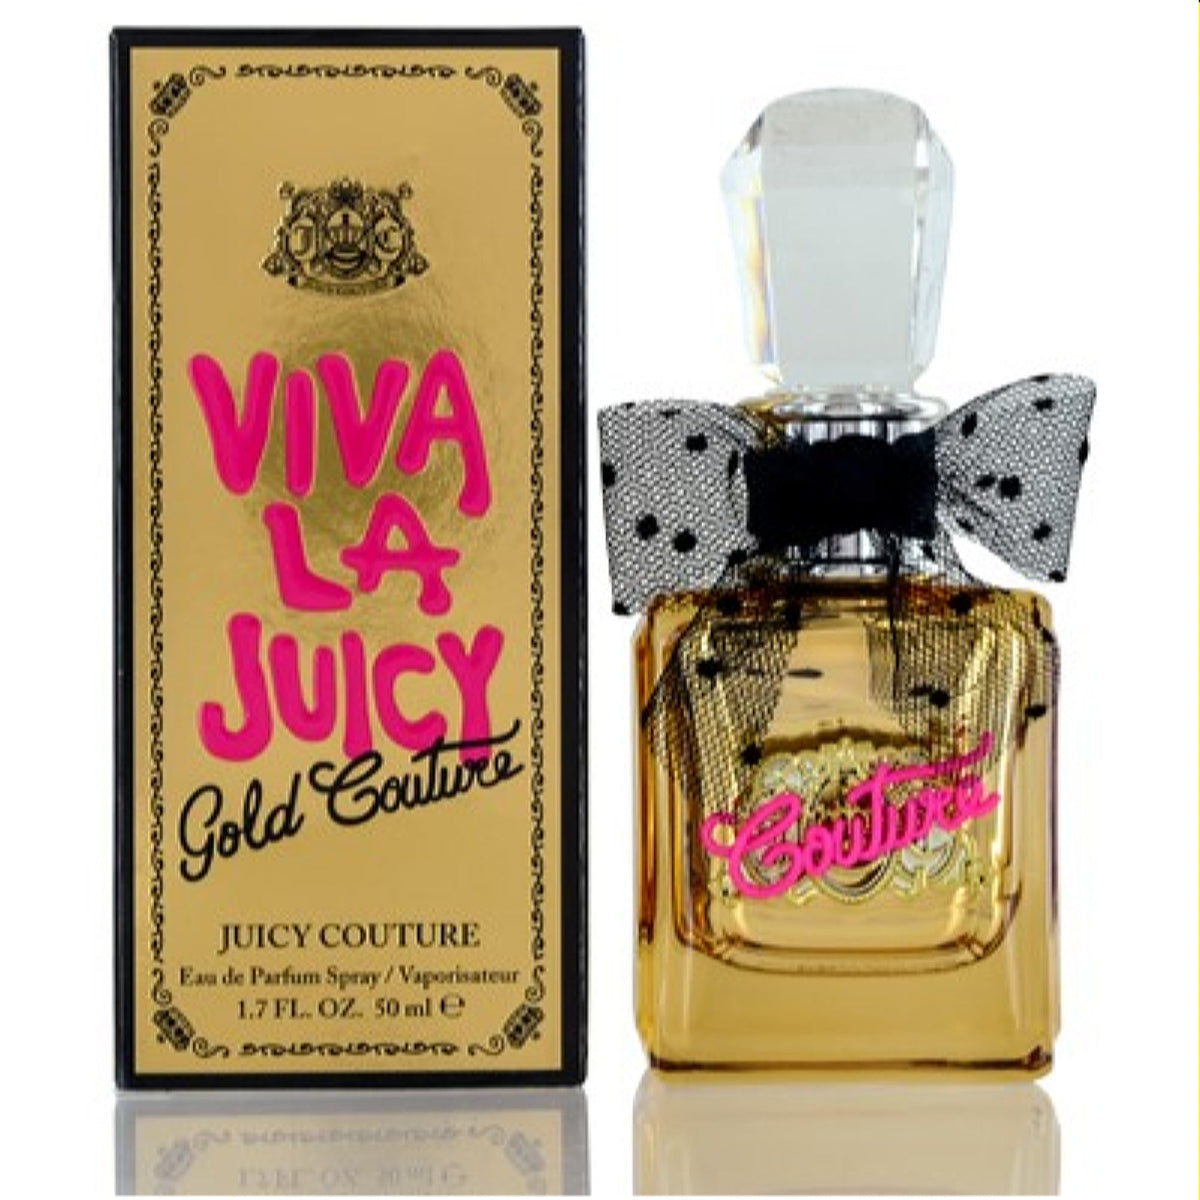 Viva La Juicy Gold Couture Juicy Couture Edp Spray 1.7 Oz (50 Ml) For Women  DVIF40002